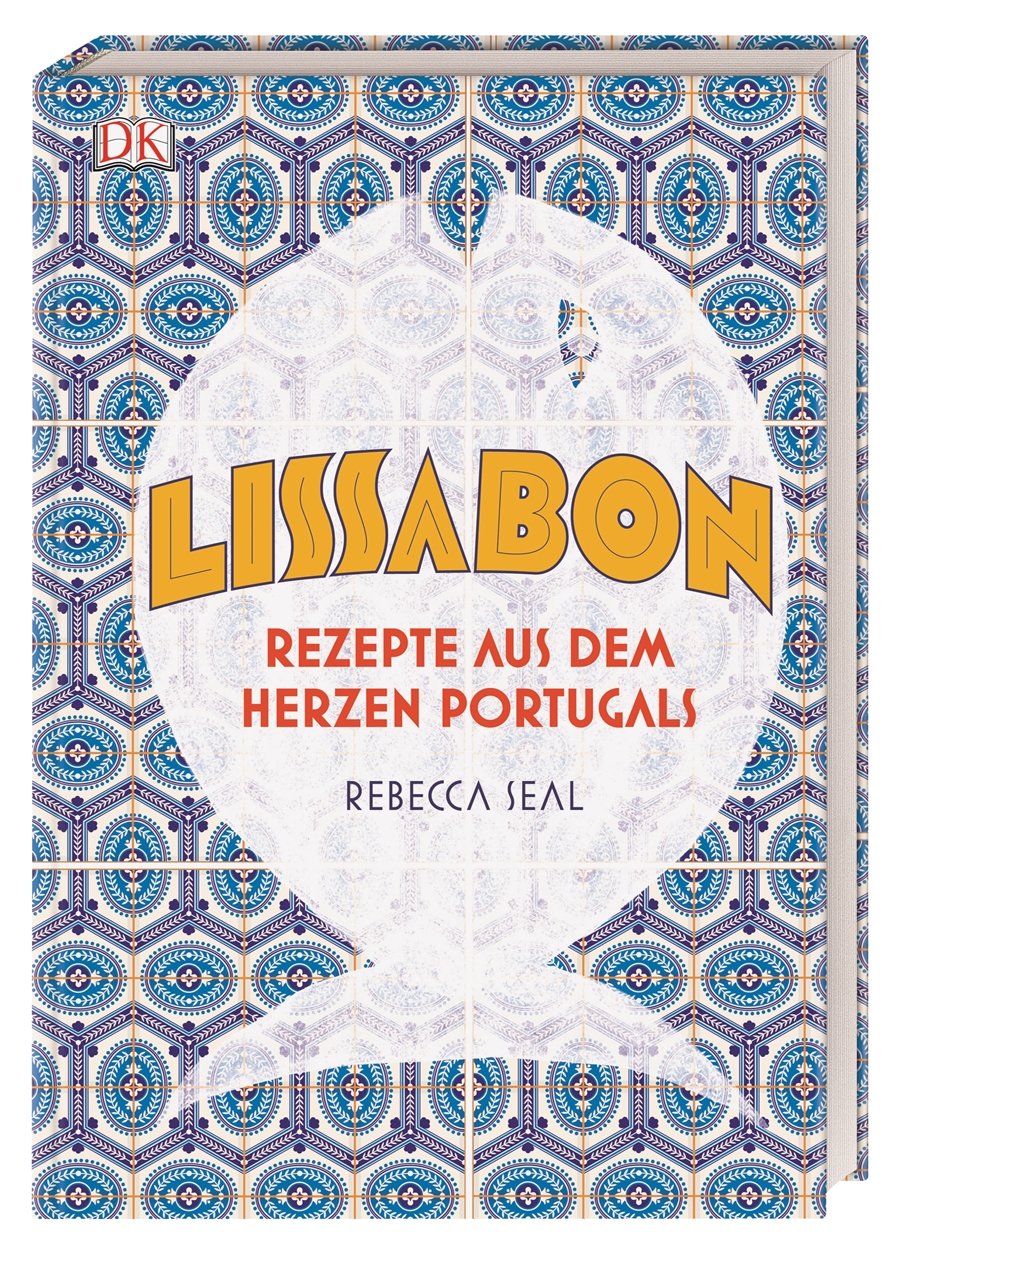 Rebecca Seal, LISSABON